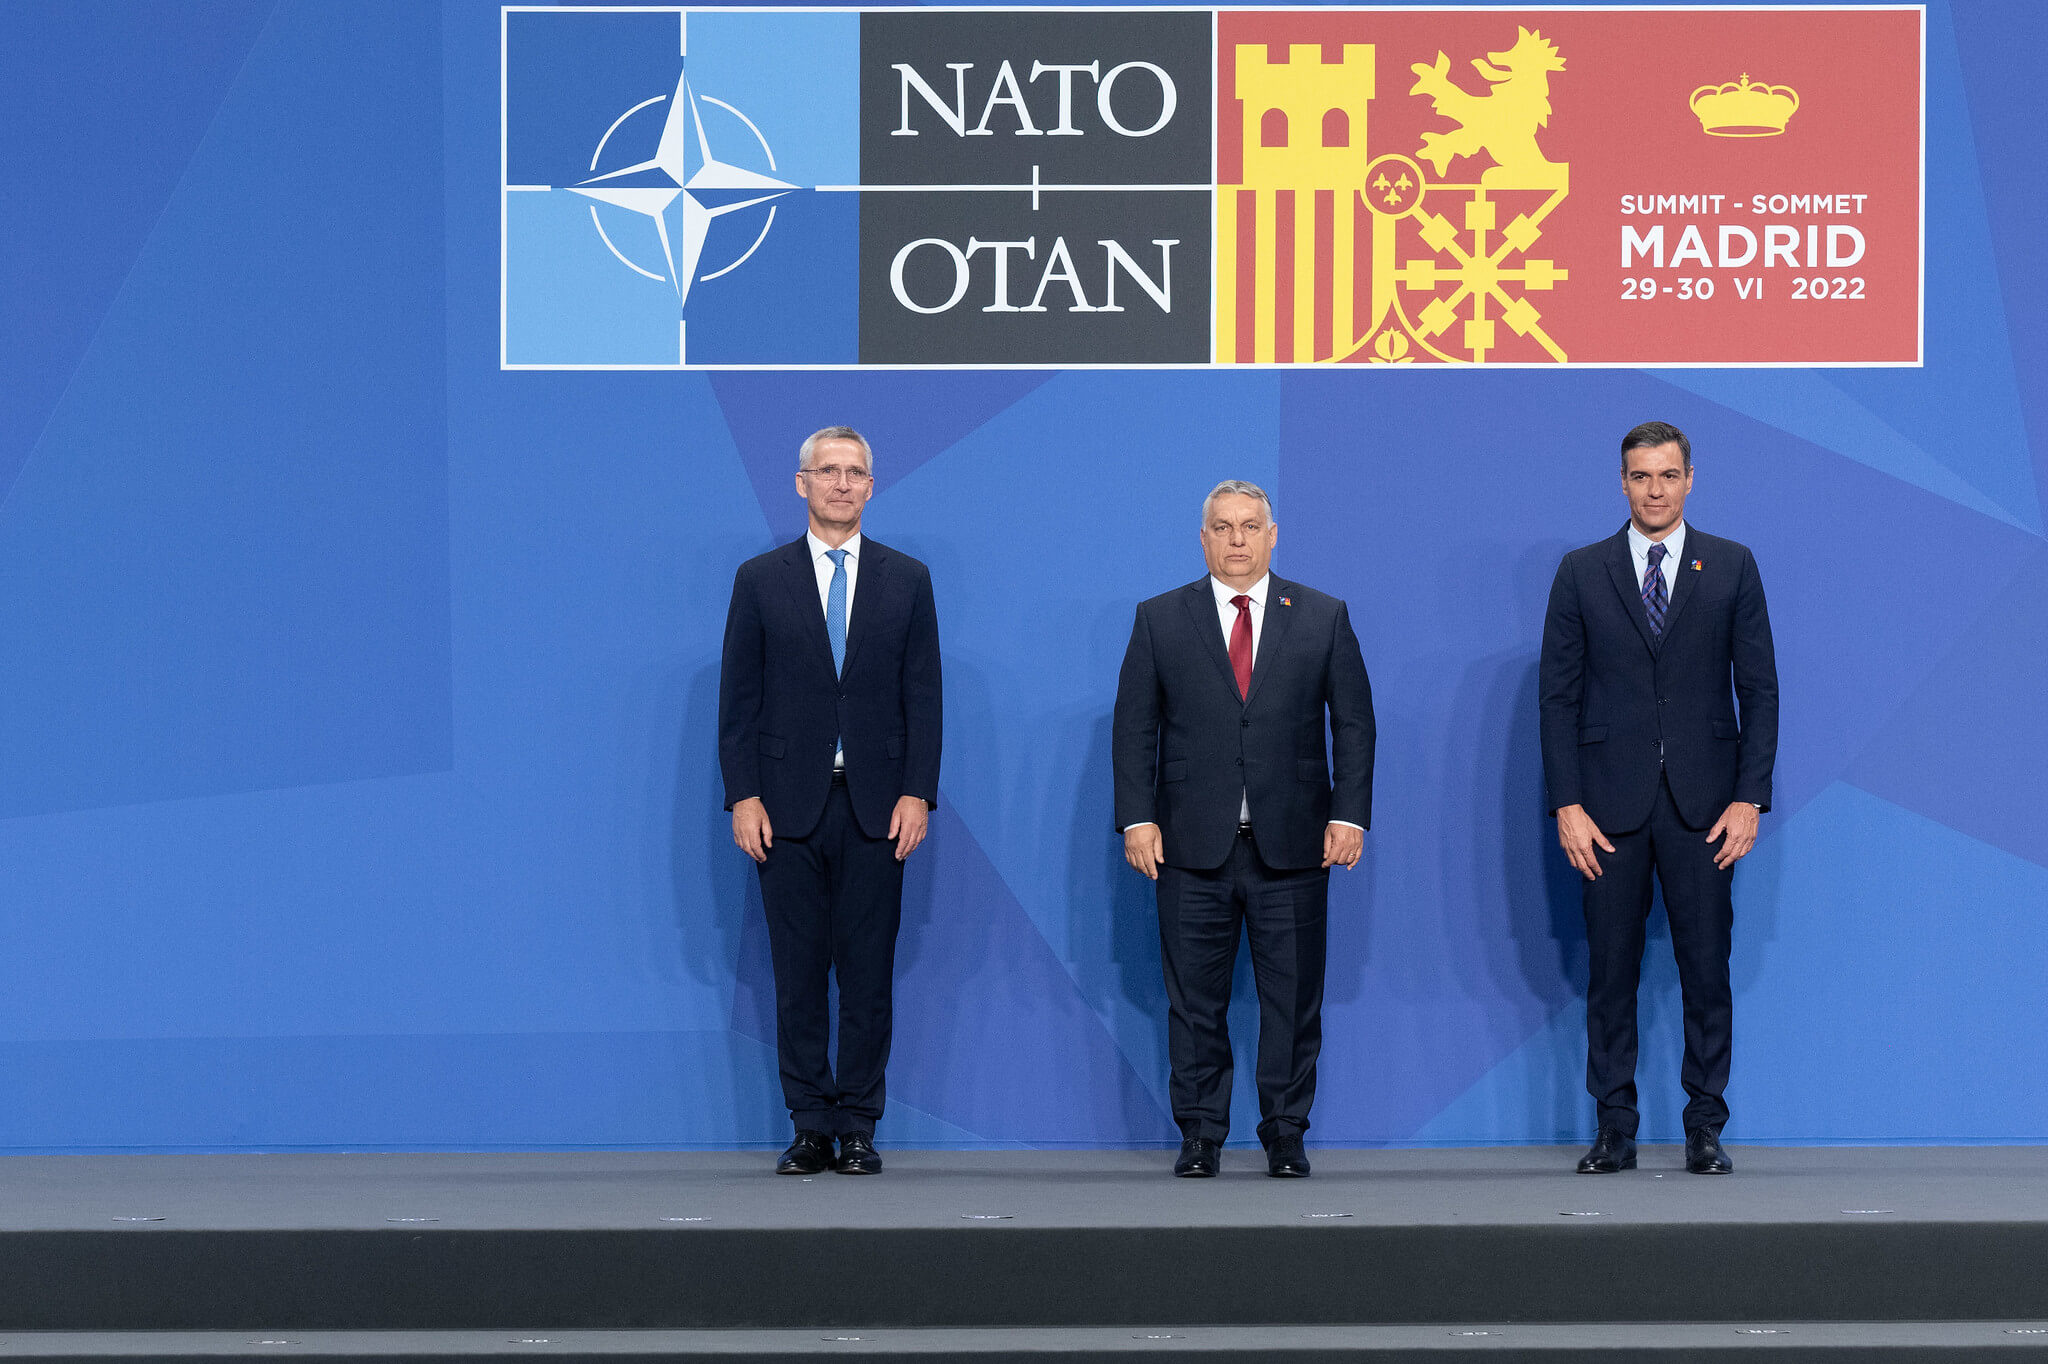 Kolen - NATO Secretary General Jens Stoltenberg and the Prime Minister of Spain, Pedro Sánchez welcome Prime Minister of Hungary Viktor Orbán in June, 2022. NATO